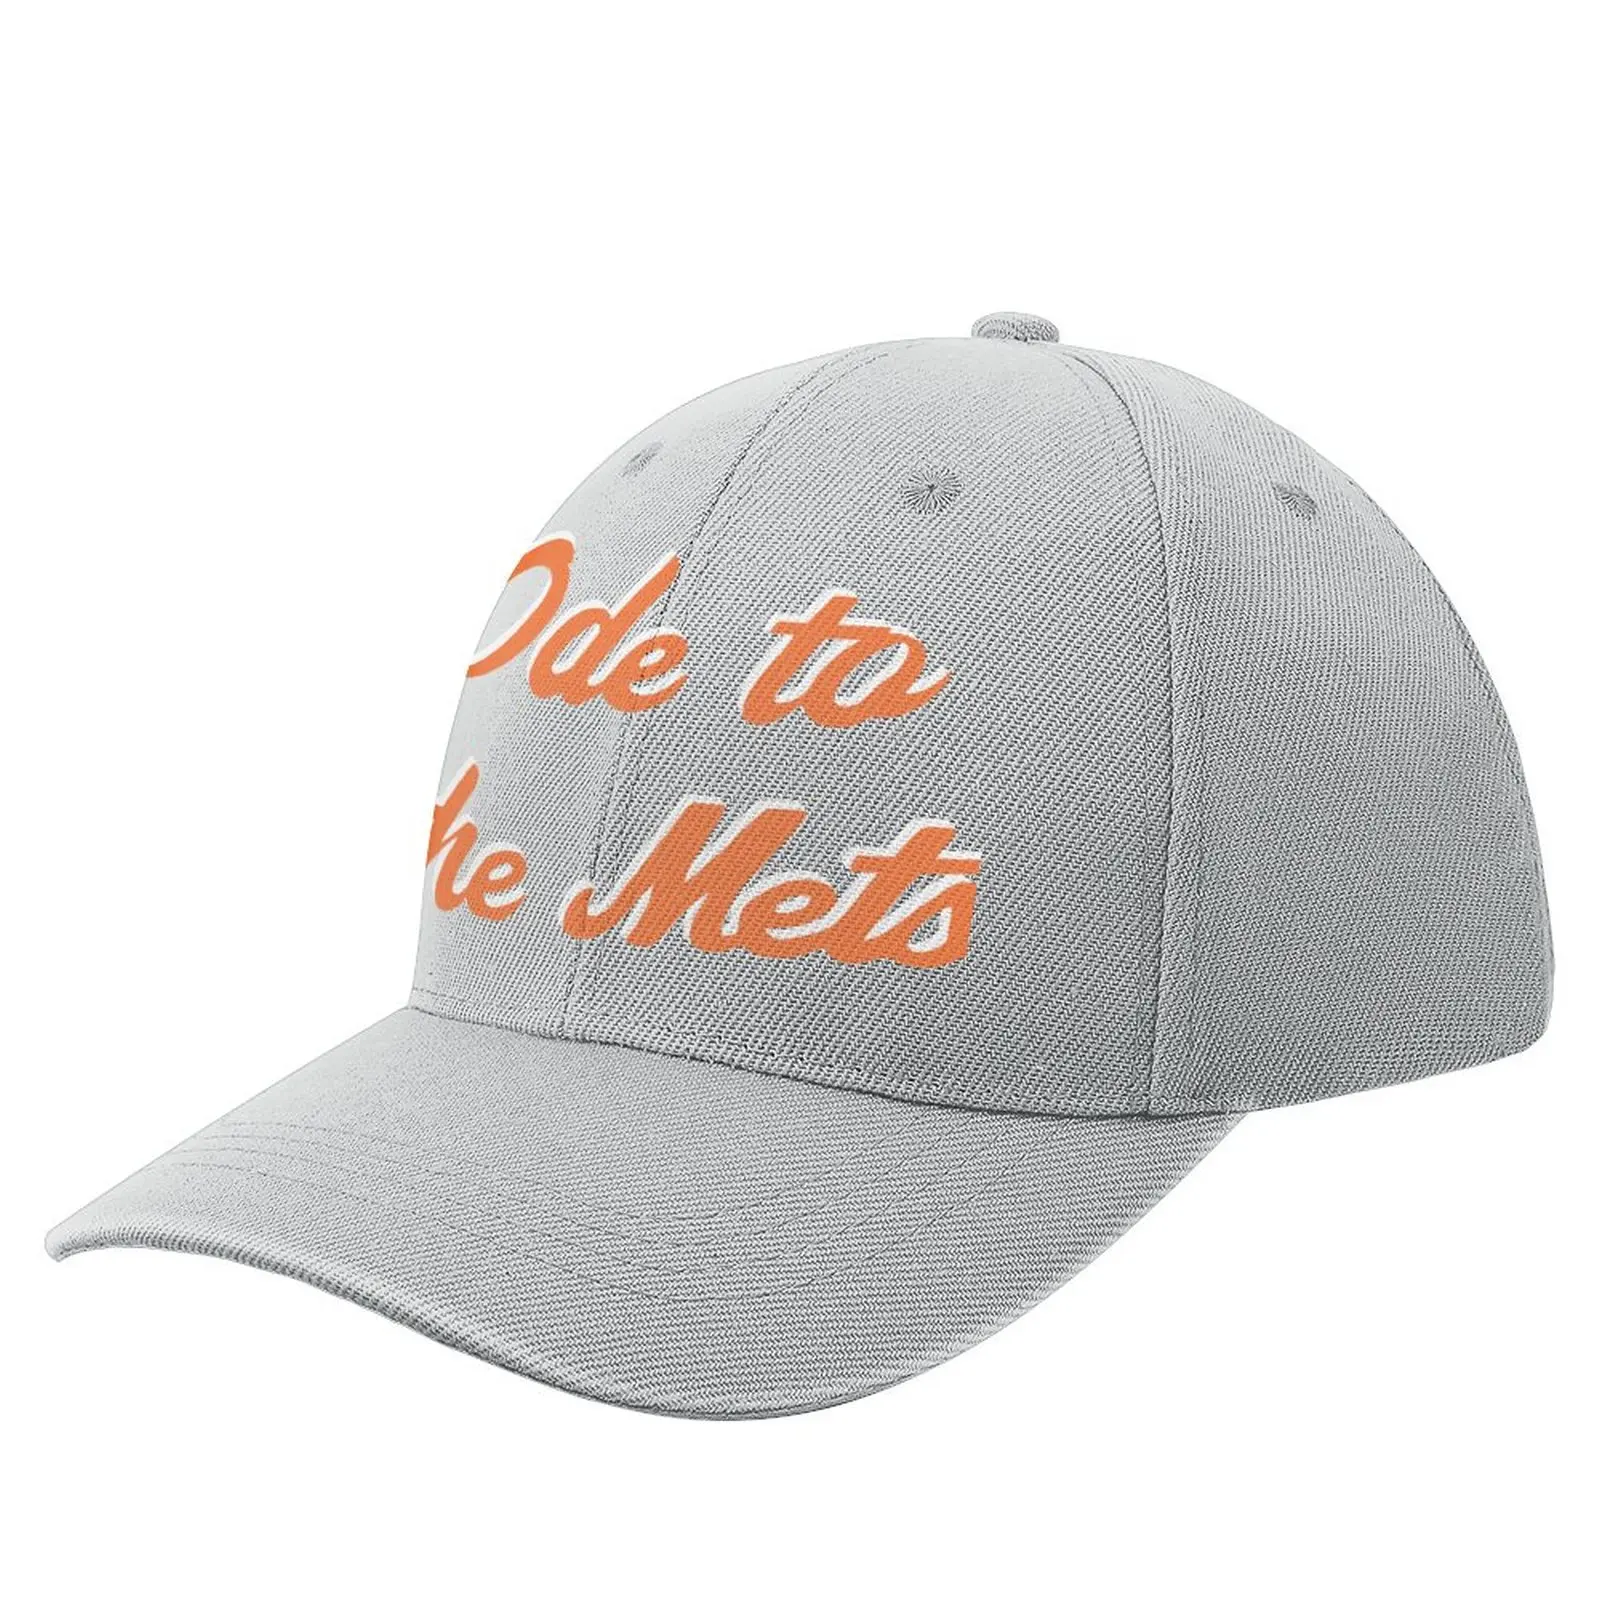 

The Strokes 'Ode to the Mets' designCap Baseball Cap Snapback Cap black Brand Man Caps Caps For Men Women'S